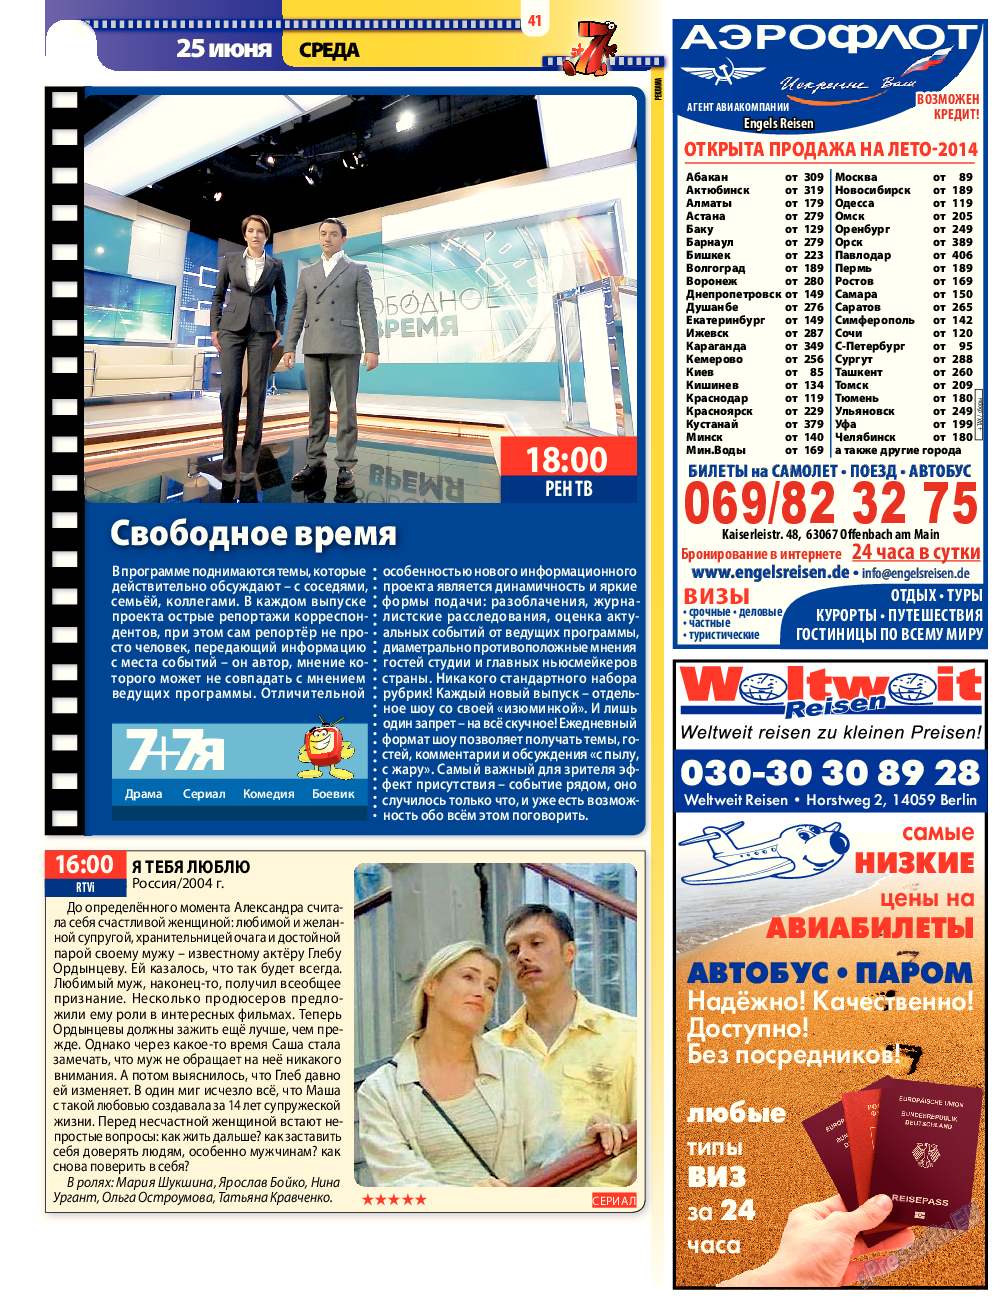 7плюс7я (журнал). 2014 год, номер 25, стр. 41